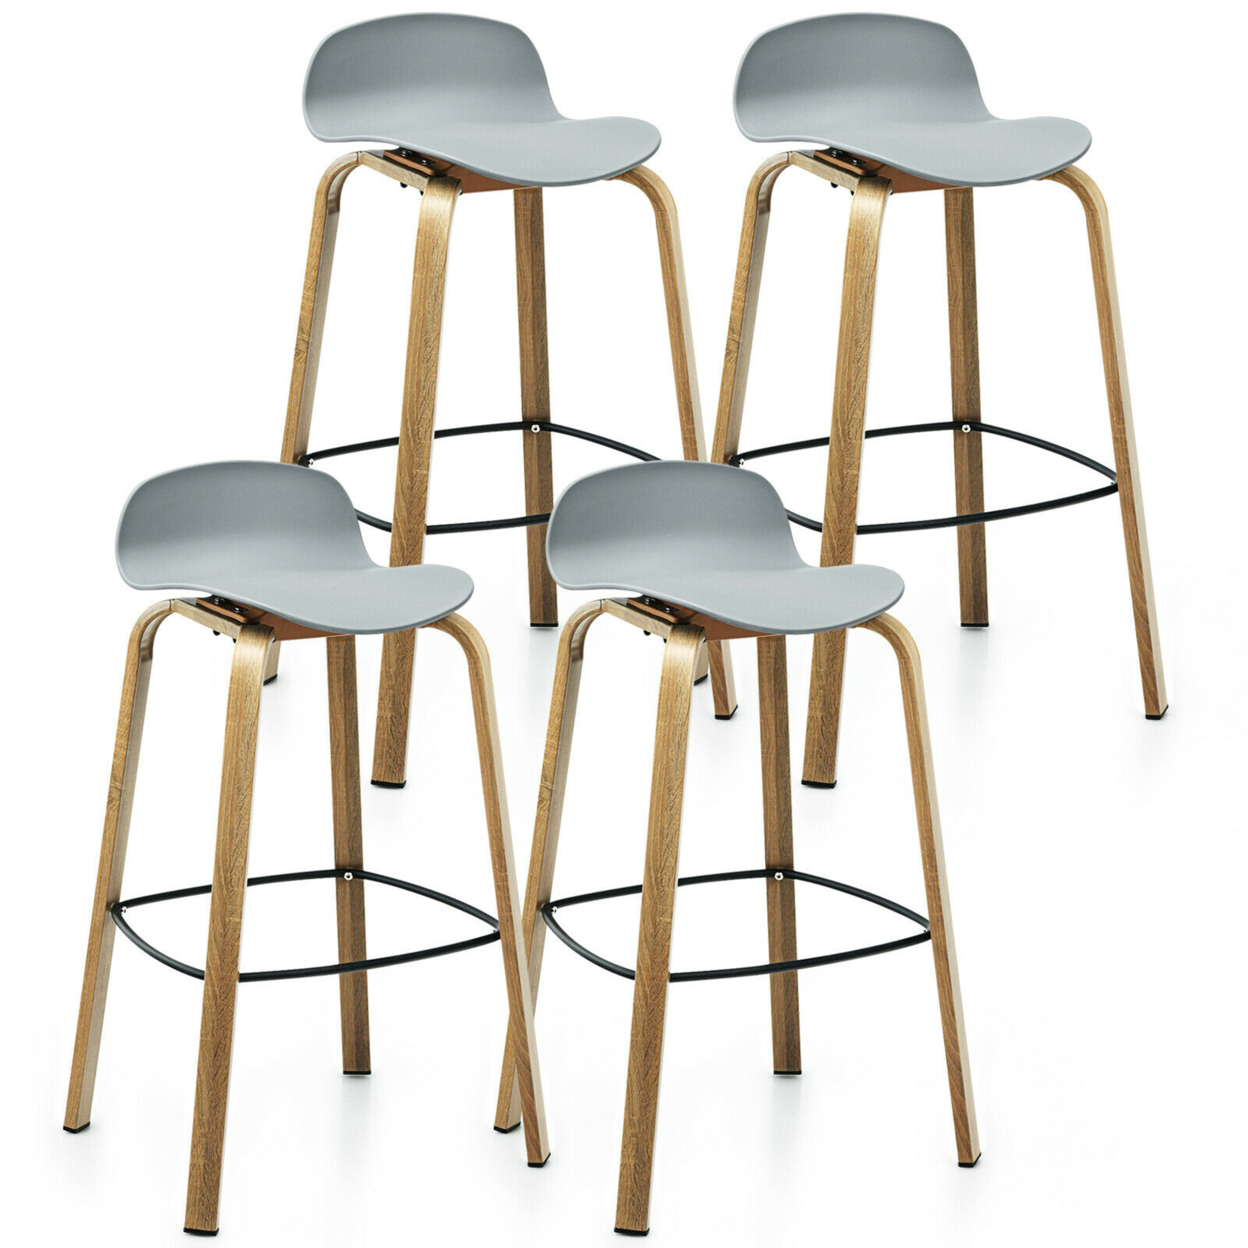 Modern Set Of 4 Barstools 30inch Pub Chairs W/Low Back & Metal Legs Grey